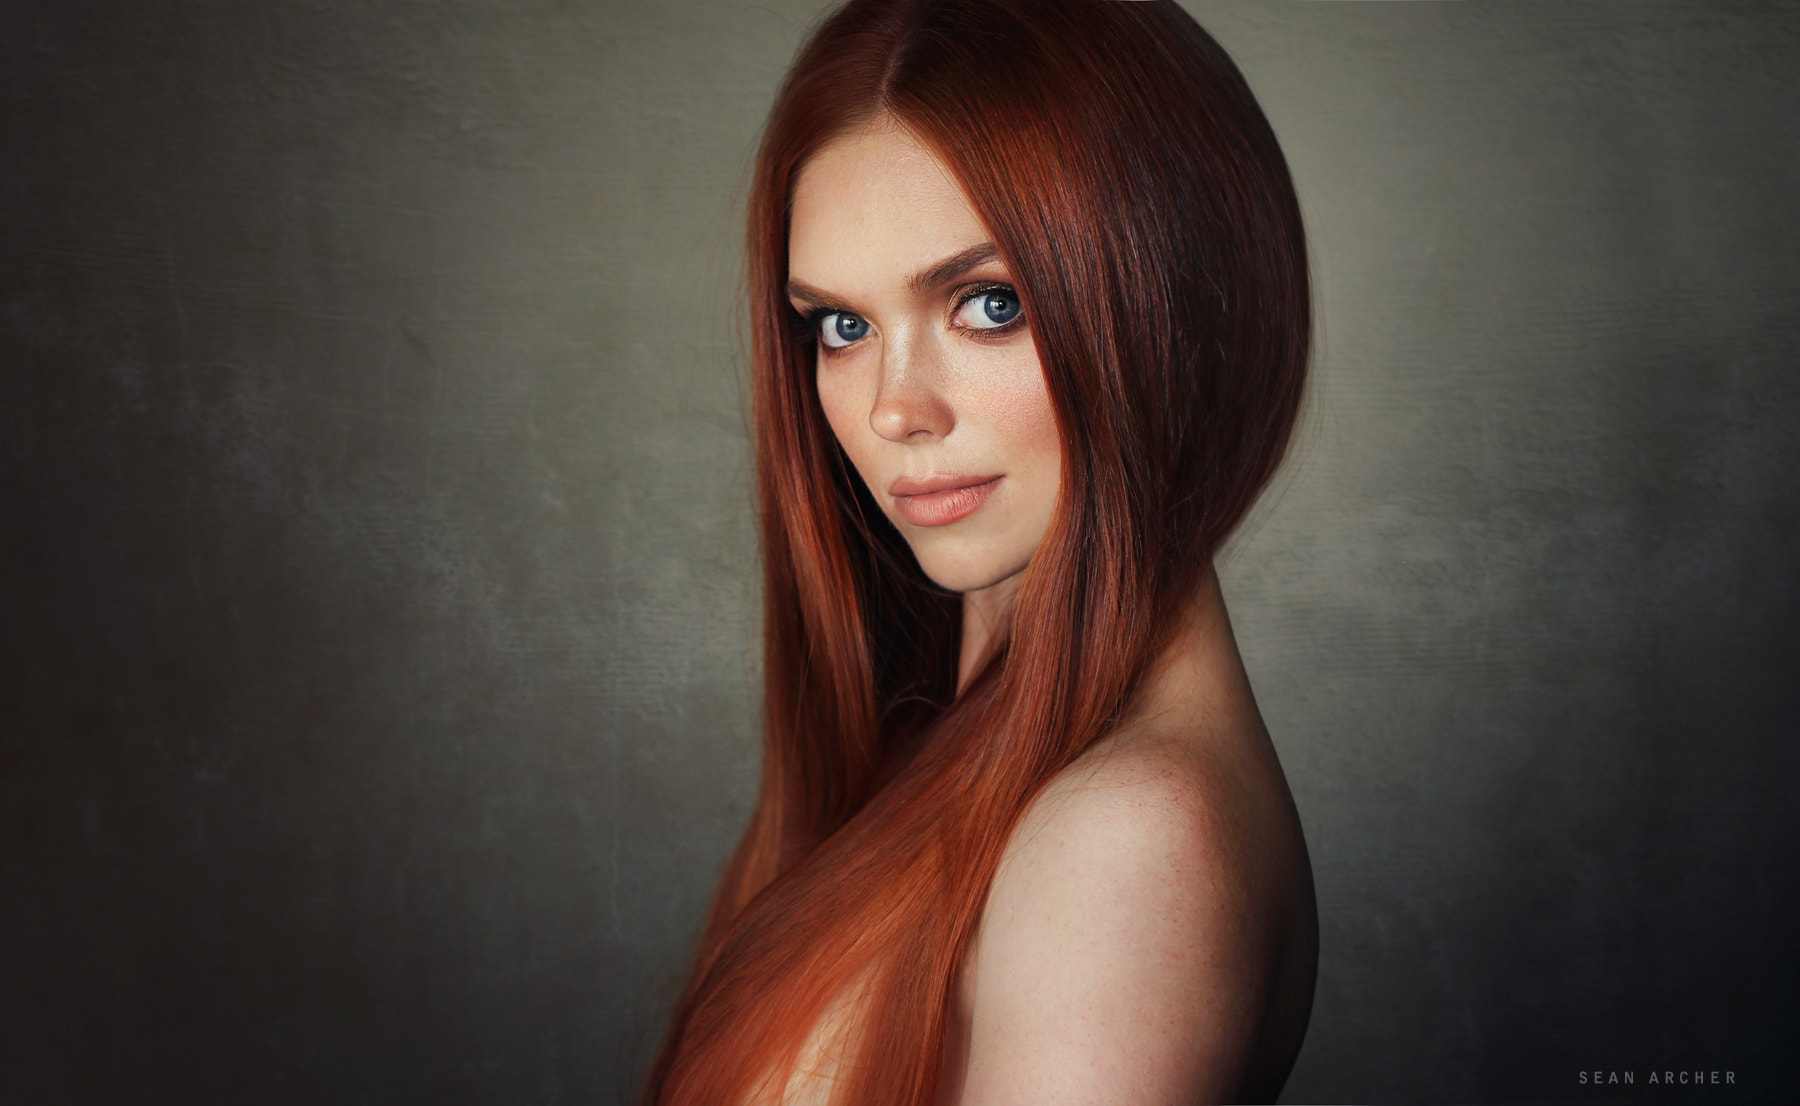 People 1800x1106 portrait redhead simple background model face women Sean Archer blue eyes bare shoulders